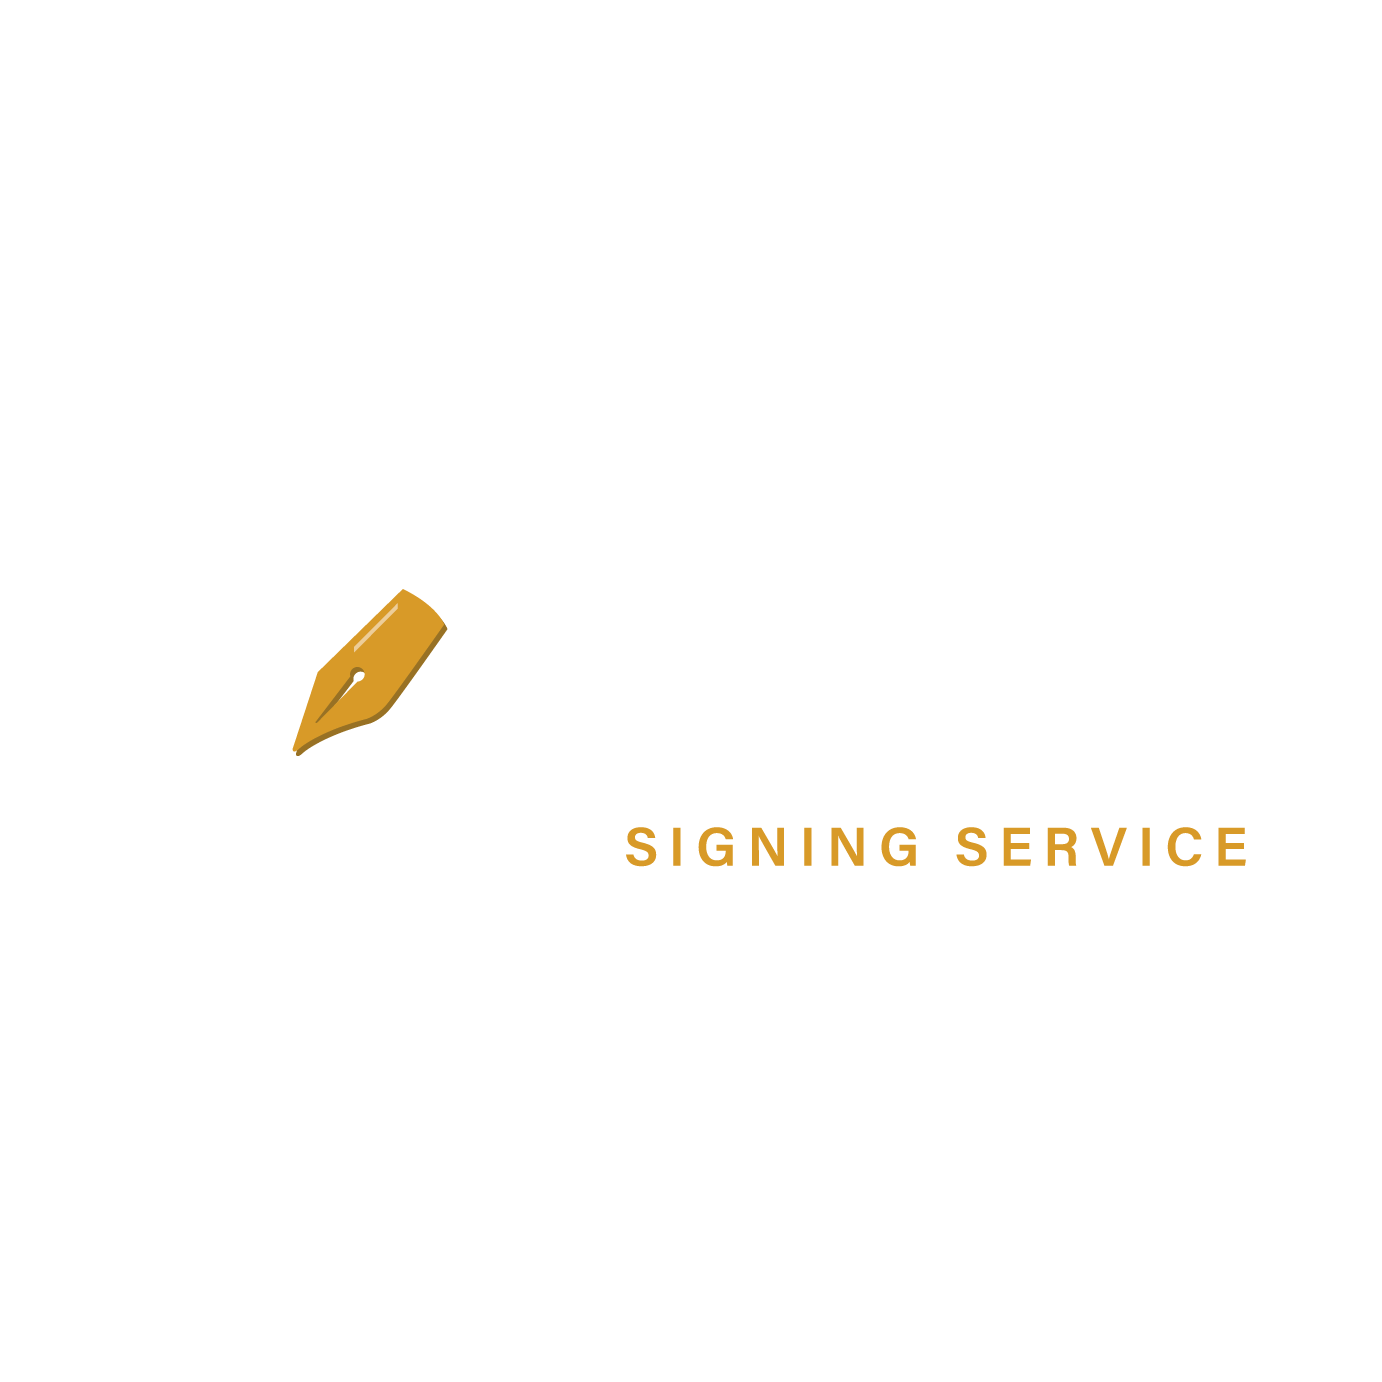 The Closing Signing Service Logo